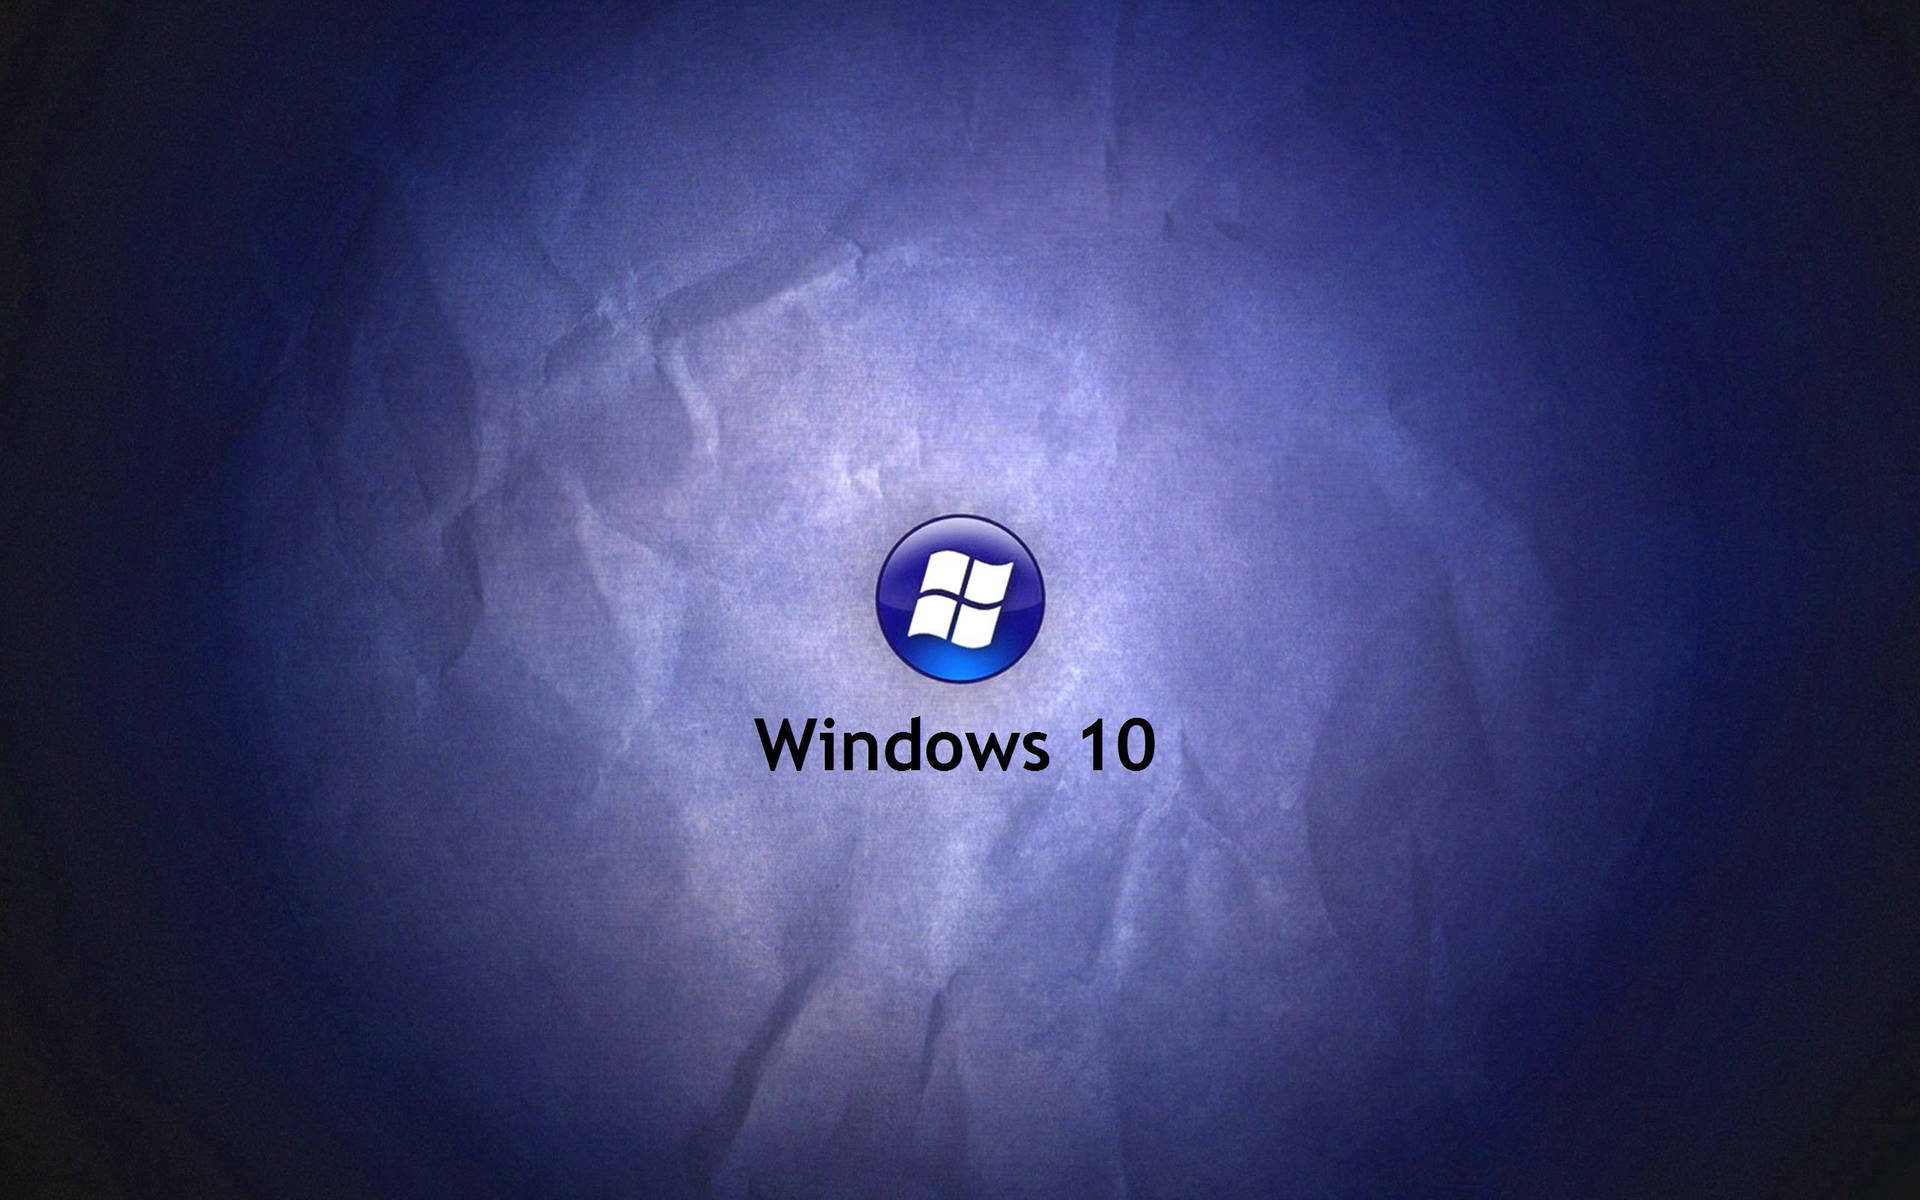 Windows 10 Hd Violet Paper Background